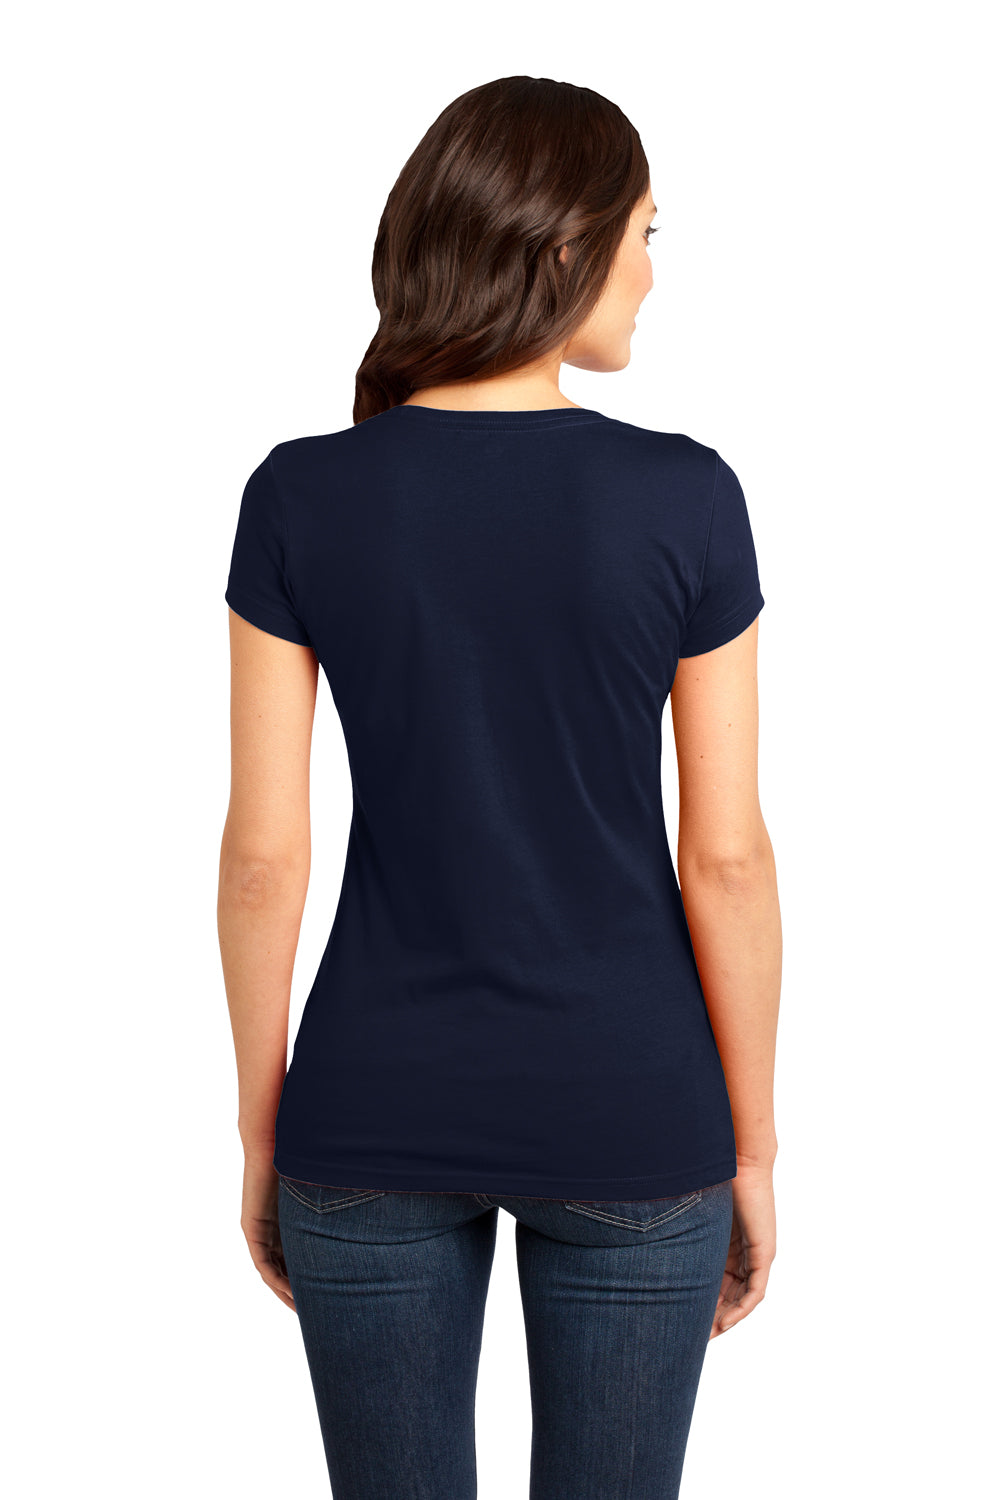 District DT6001 Womens Very Important Short Sleeve Crewneck T-Shirt Navy Blue Back